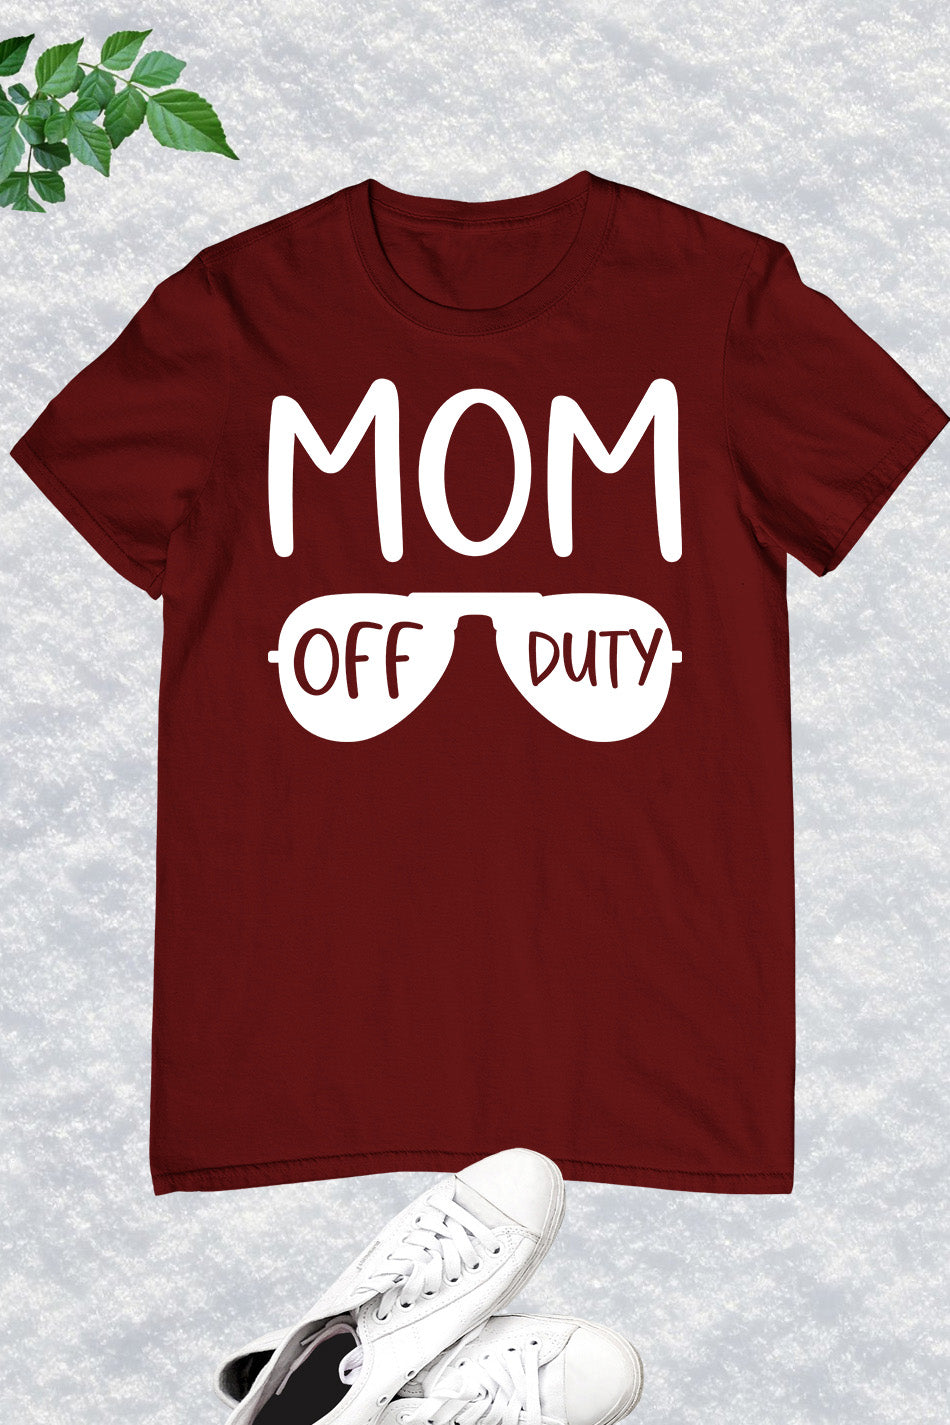 Mom Off Duty Funny Adventure T Shirt